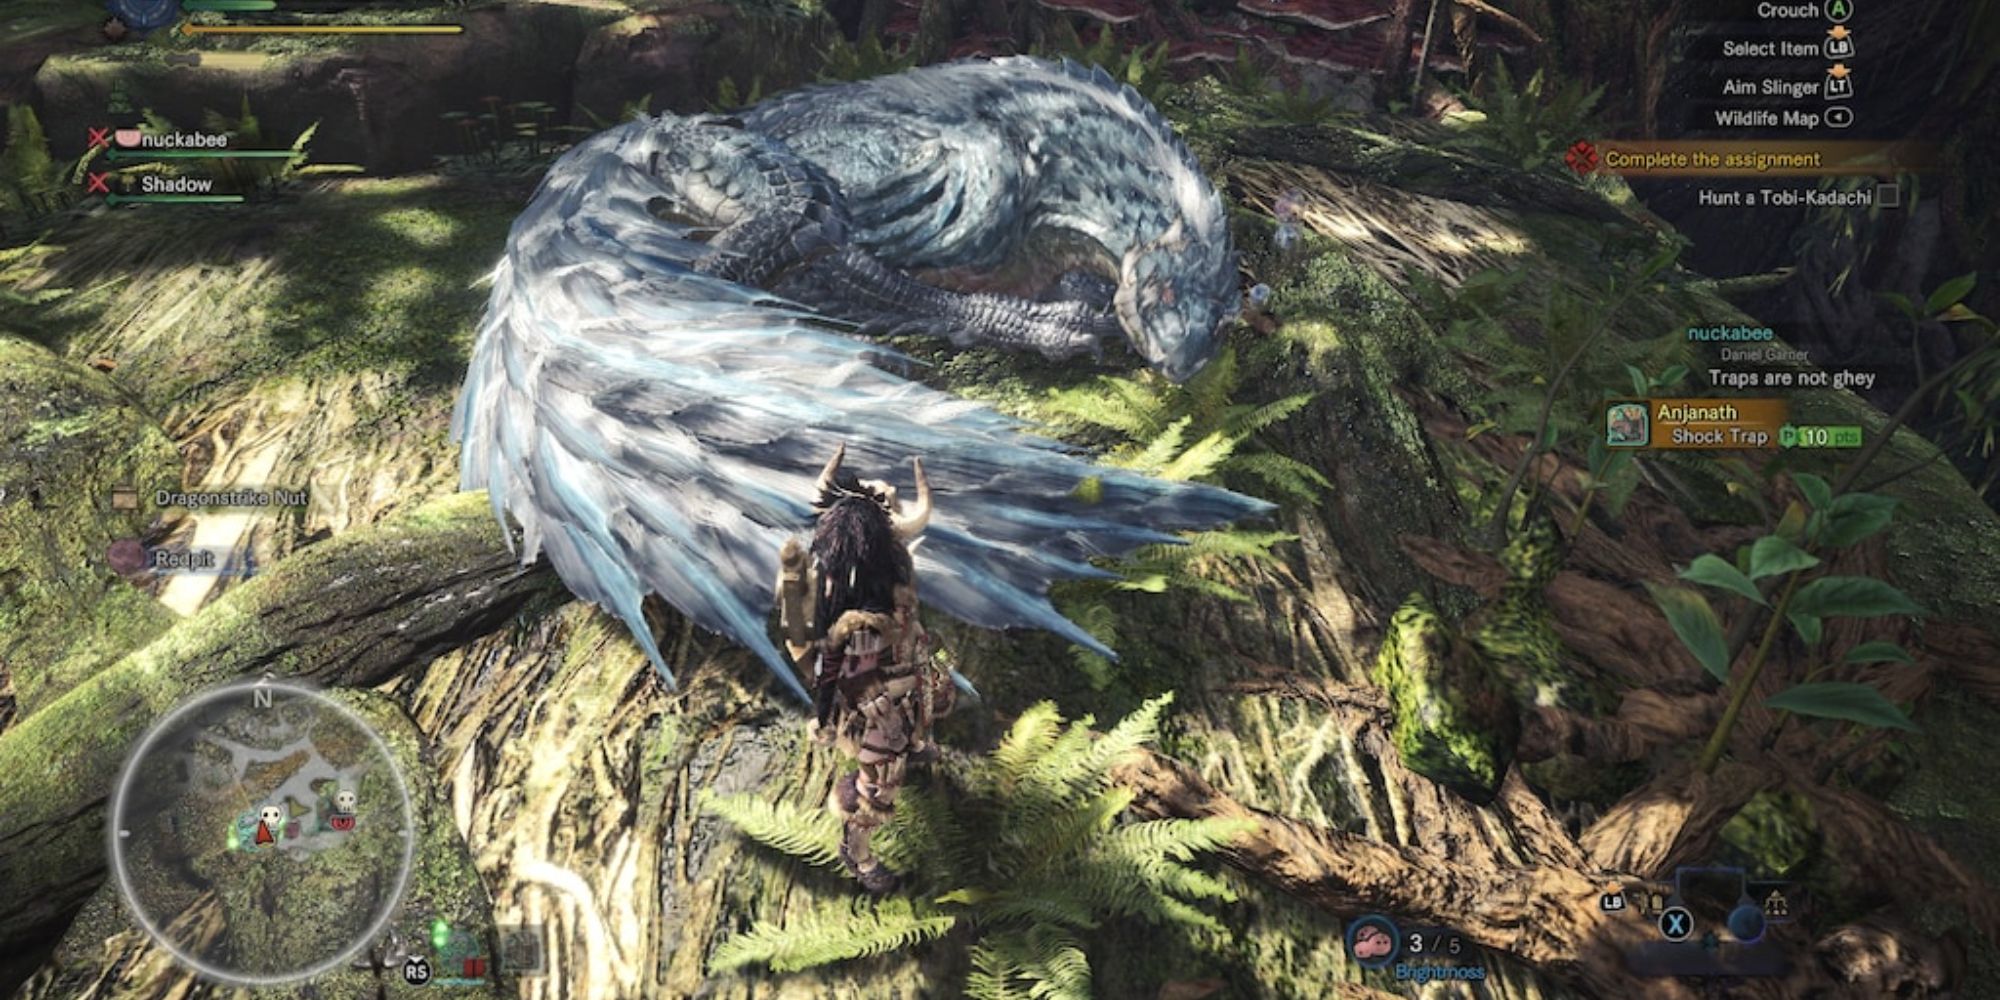 Охотник, наблюдающий, как Tobi-Kadachi спит на дереве